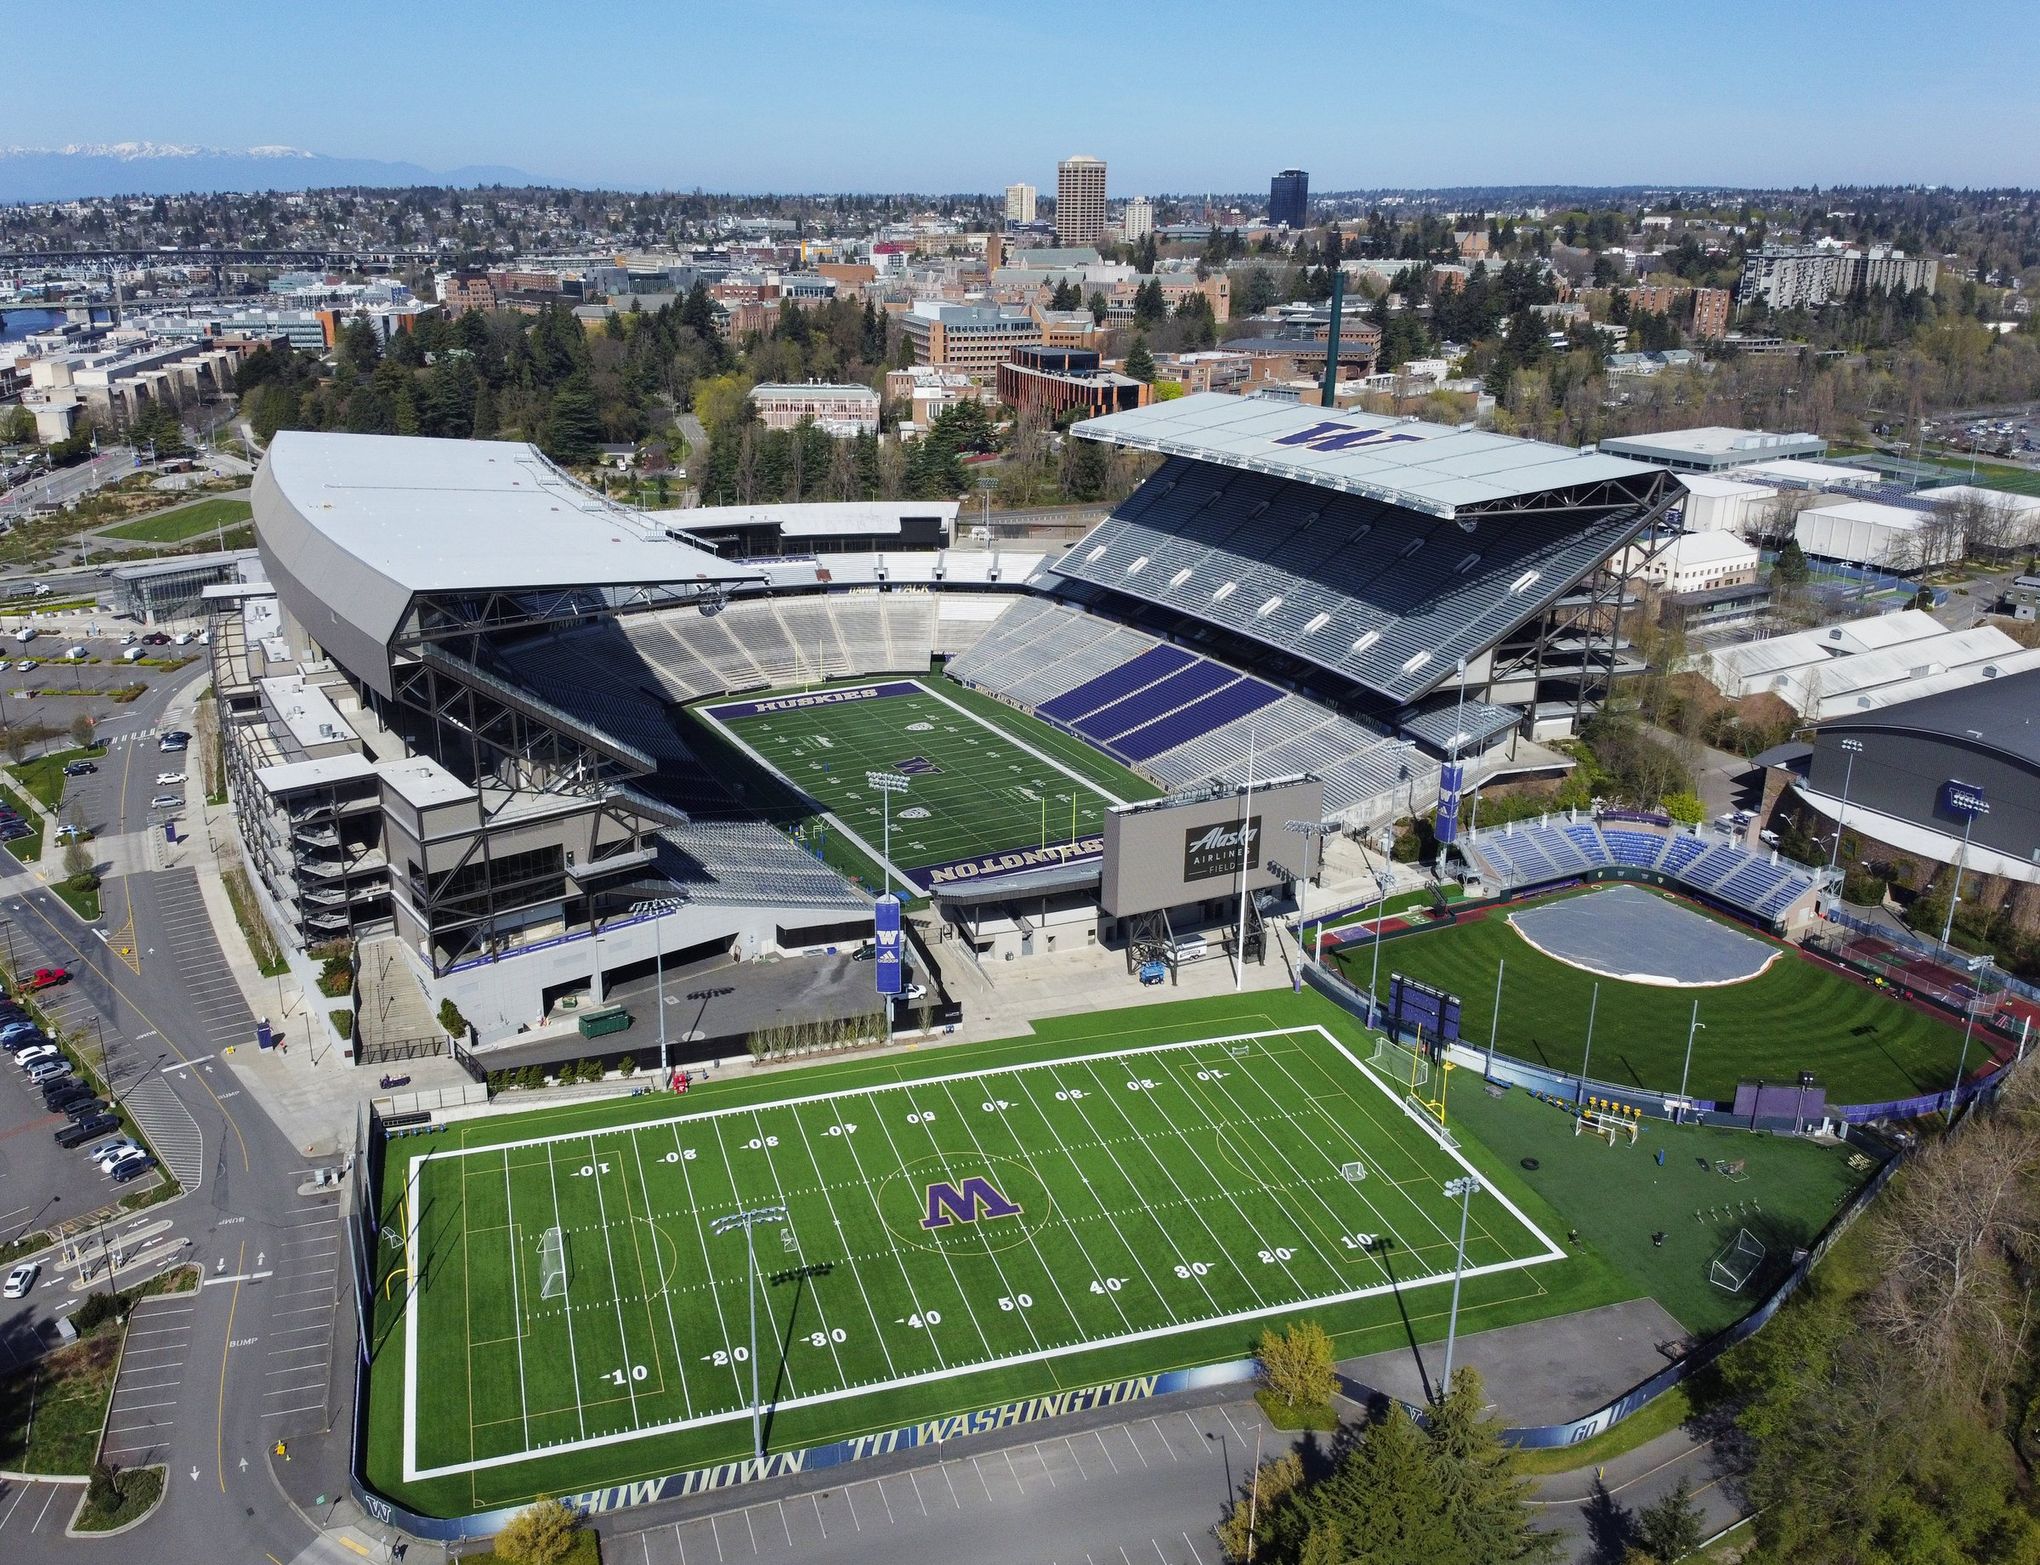 Clear Bag Policy - University of Washington Athletics